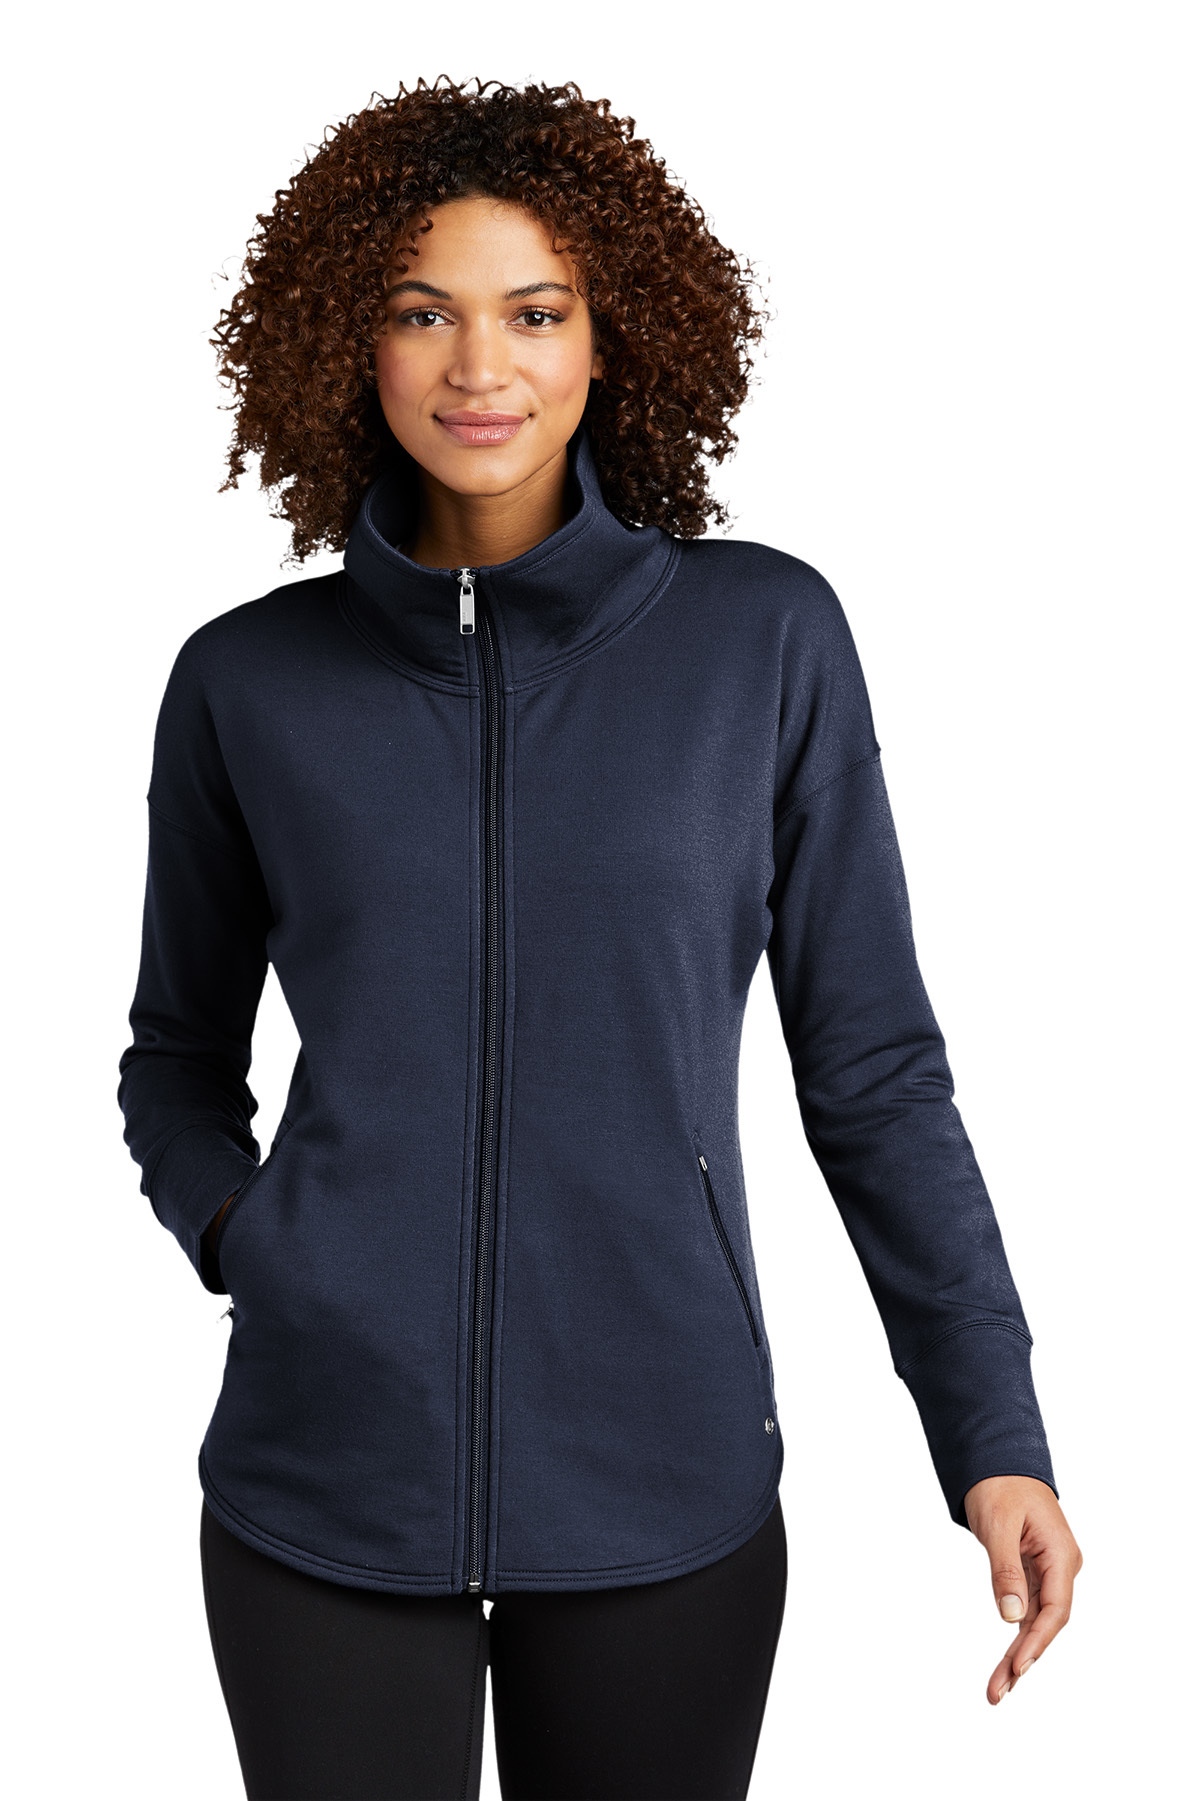 Women's Stromer Full Zip Fleece - Blue Navy